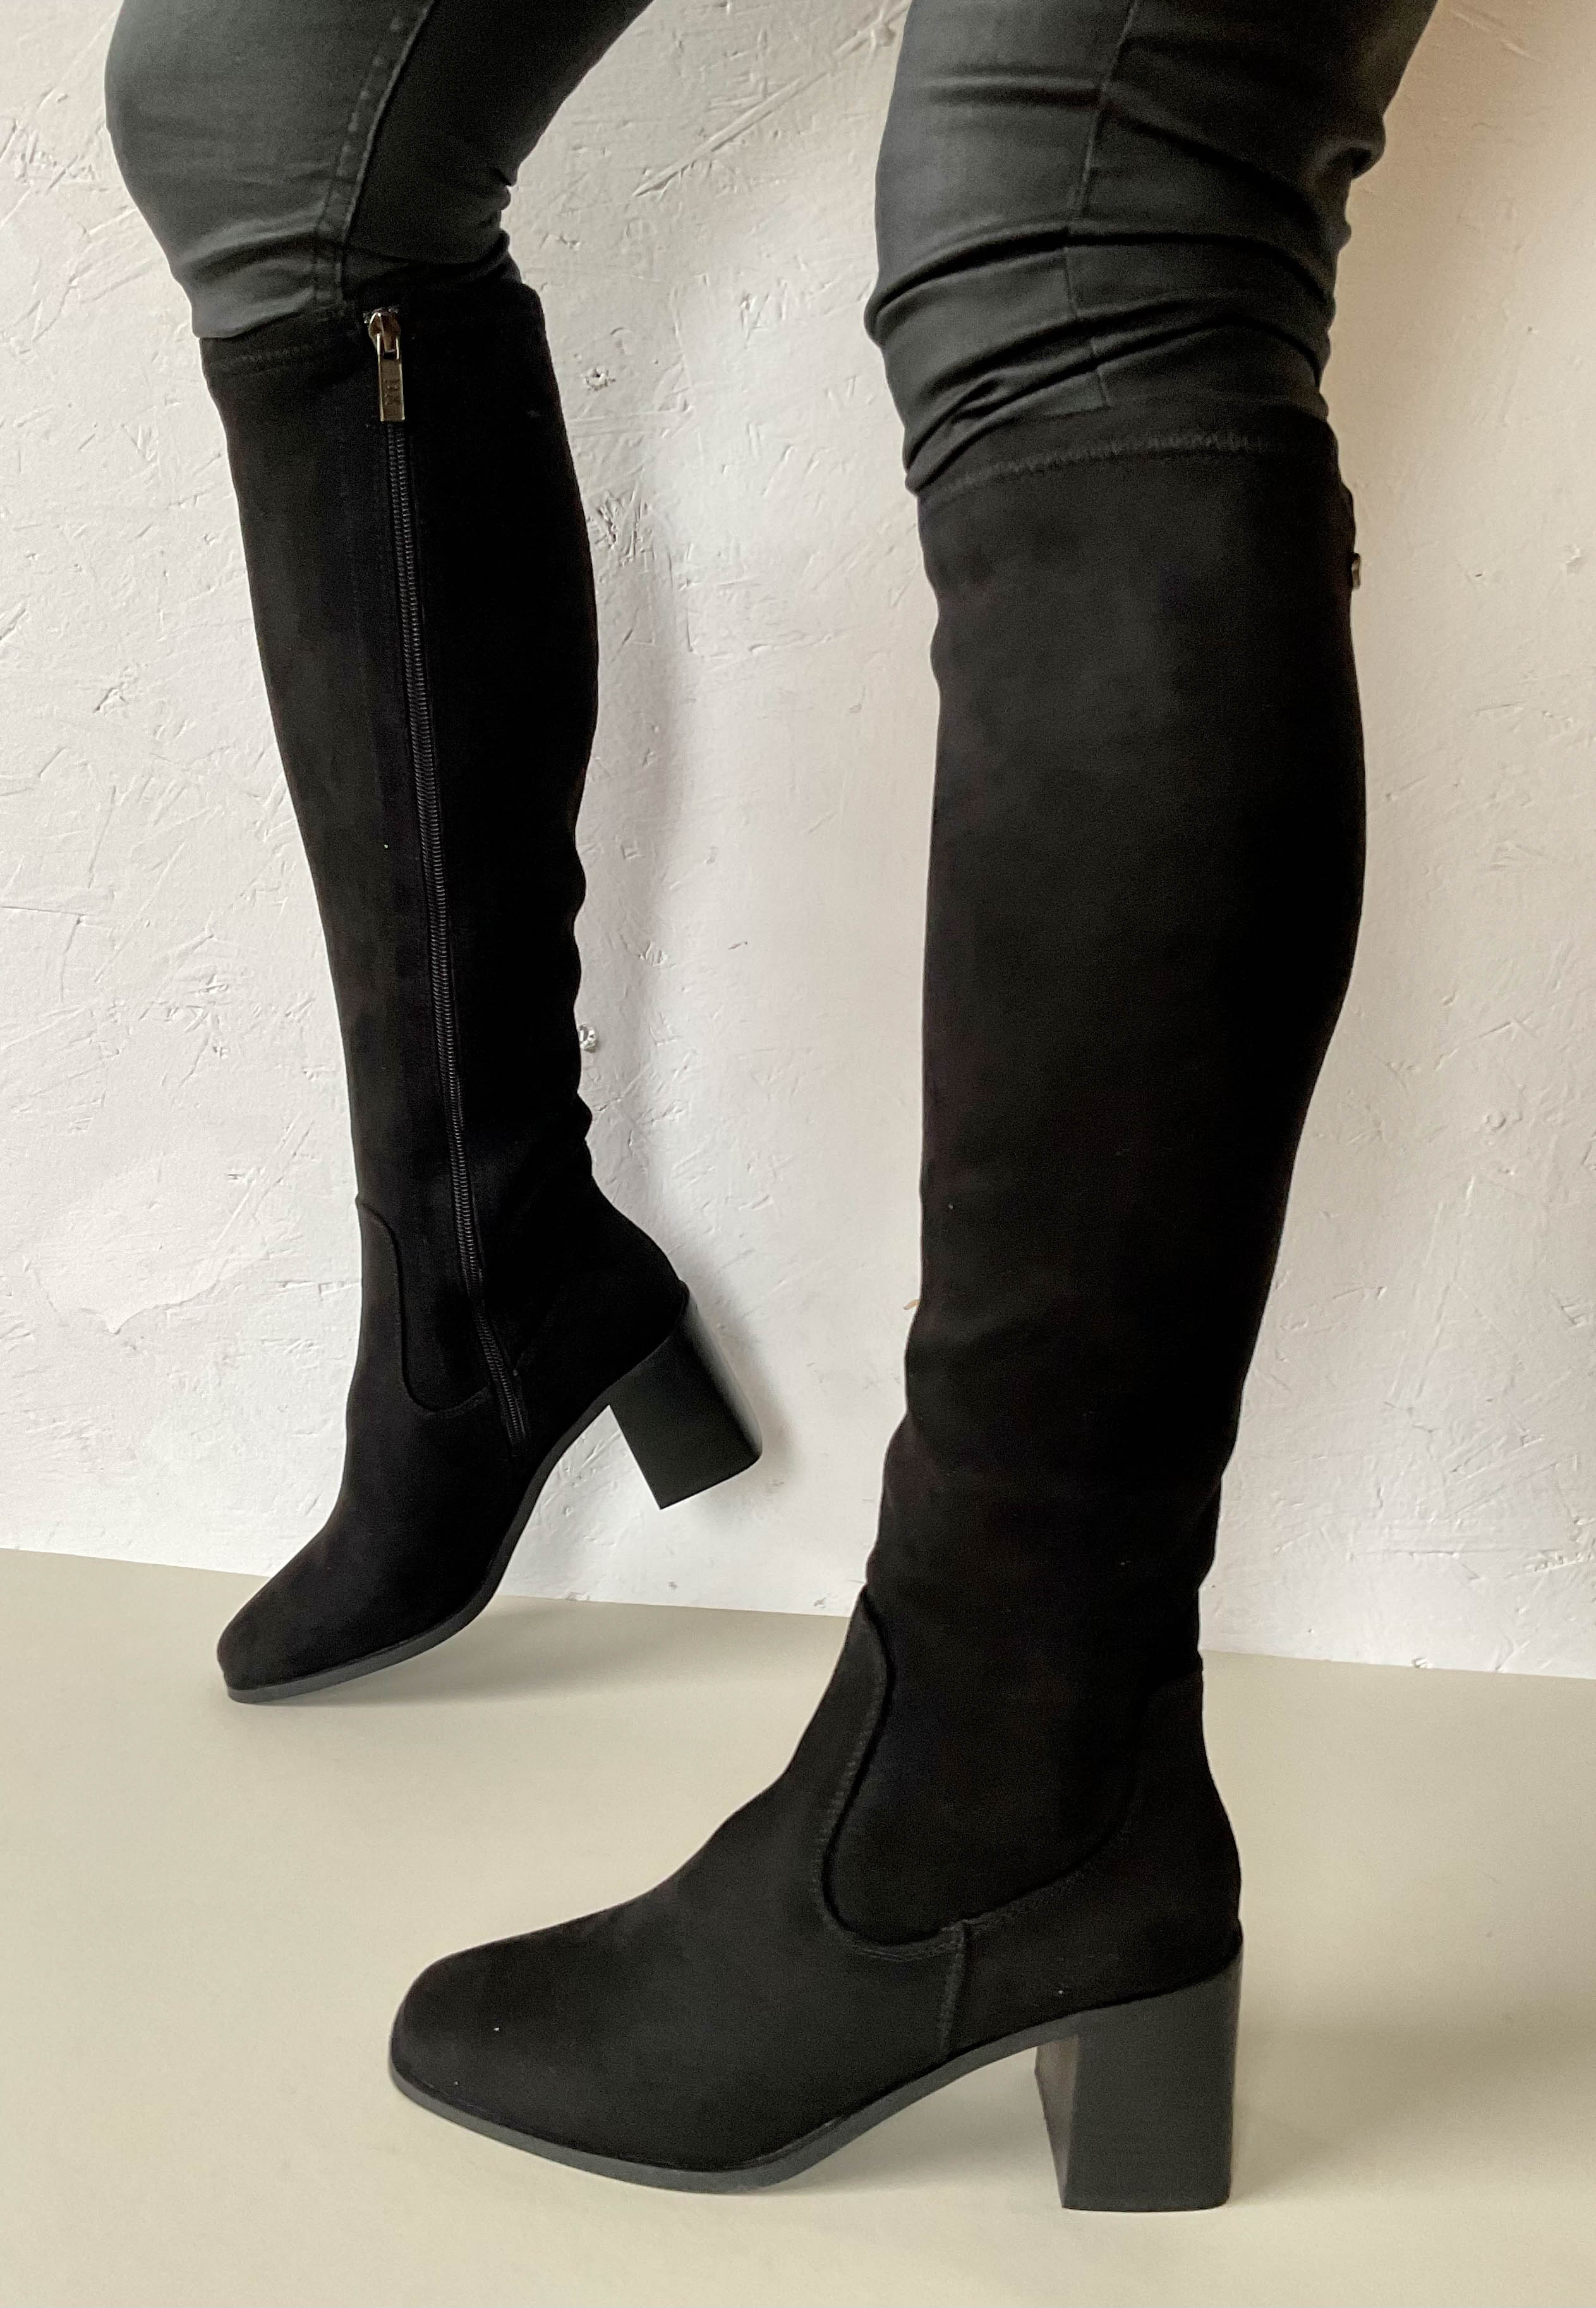 Black long boots